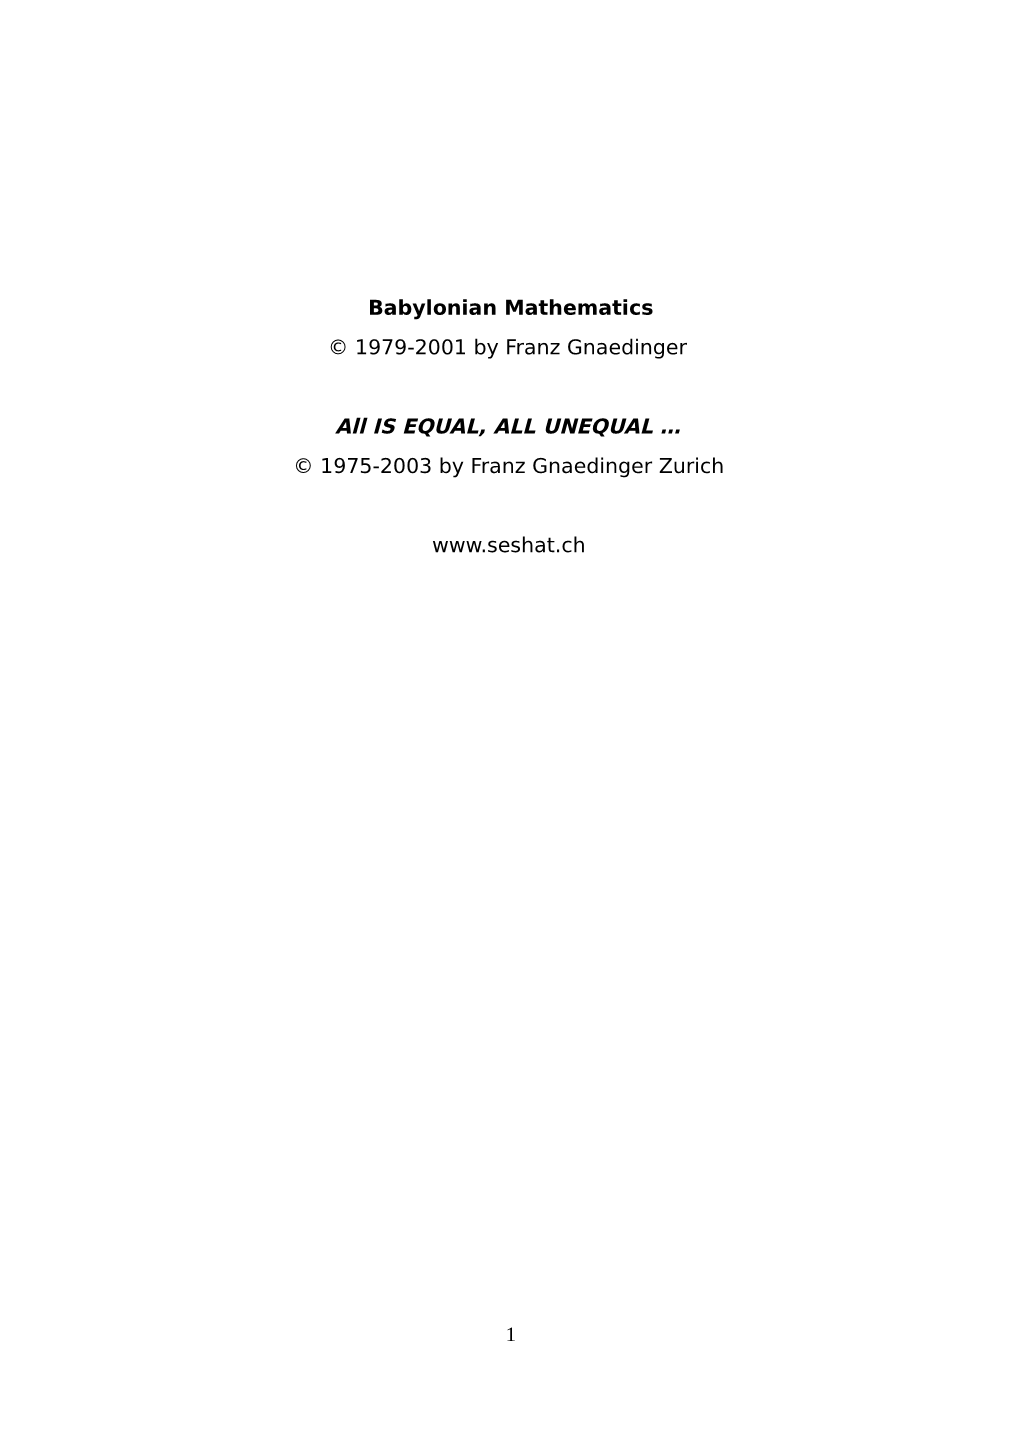 Babylonian Mathematics © 1979-2001 by Franz Gnaedinger All